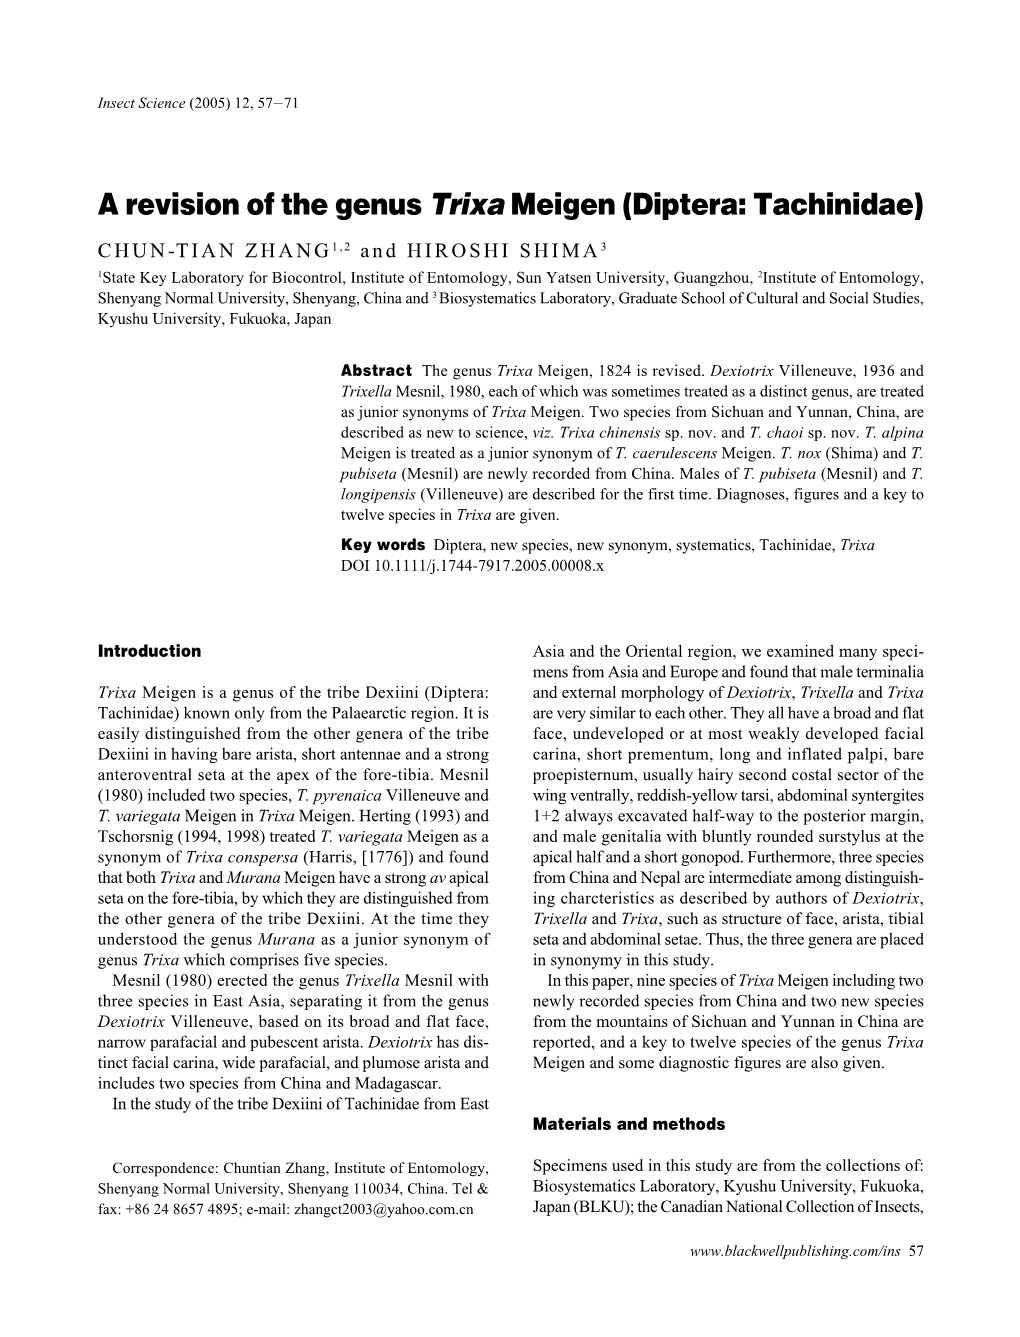 A Revision of the Genus Trixa Meigen (Diptera: Tachinidae) 57